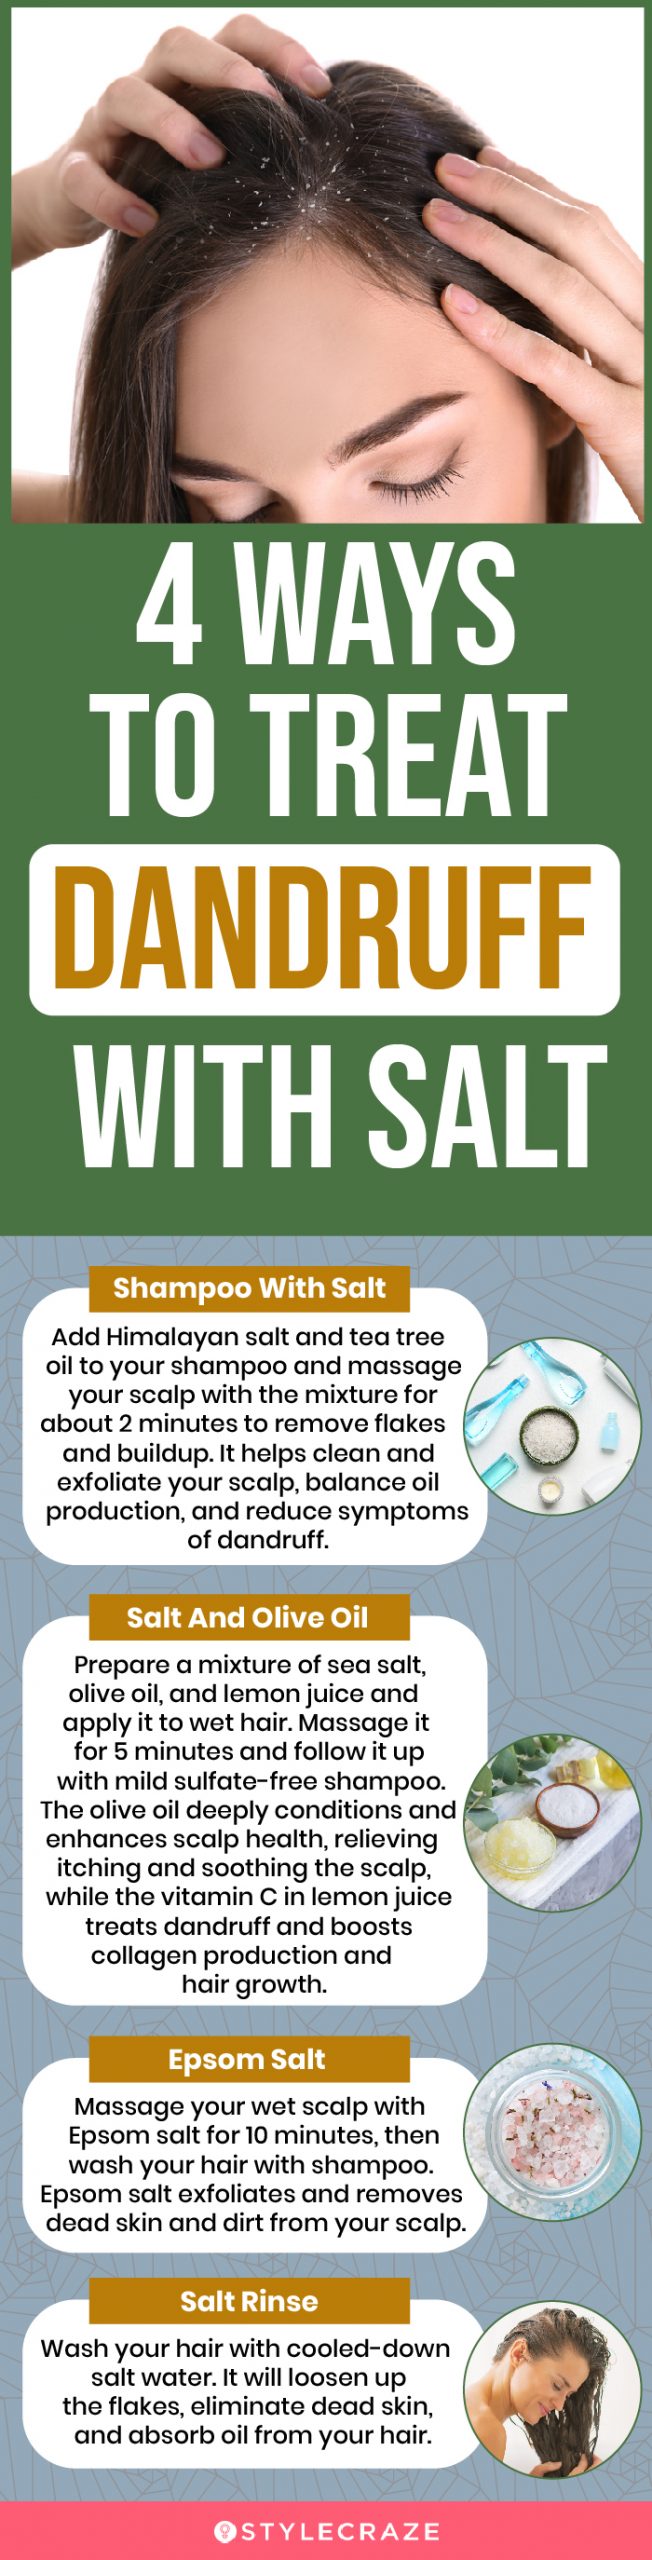 4 ways to treat dandruff with salt (infographic)